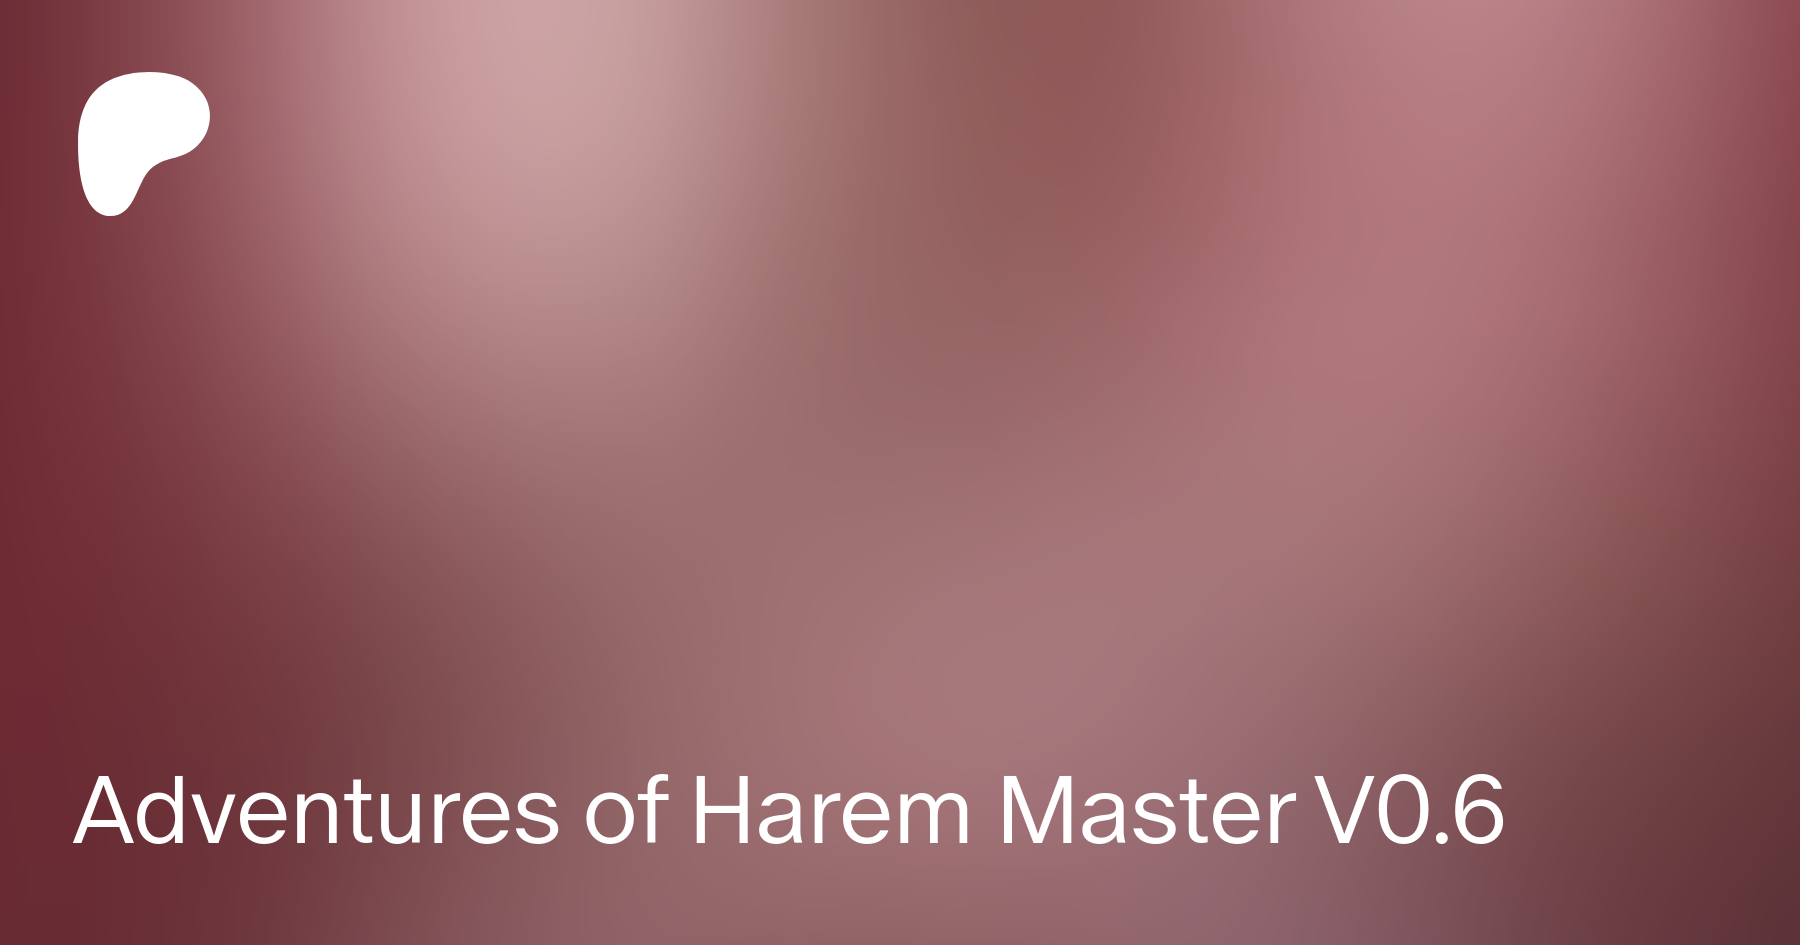 Adventures of harem master patreon code